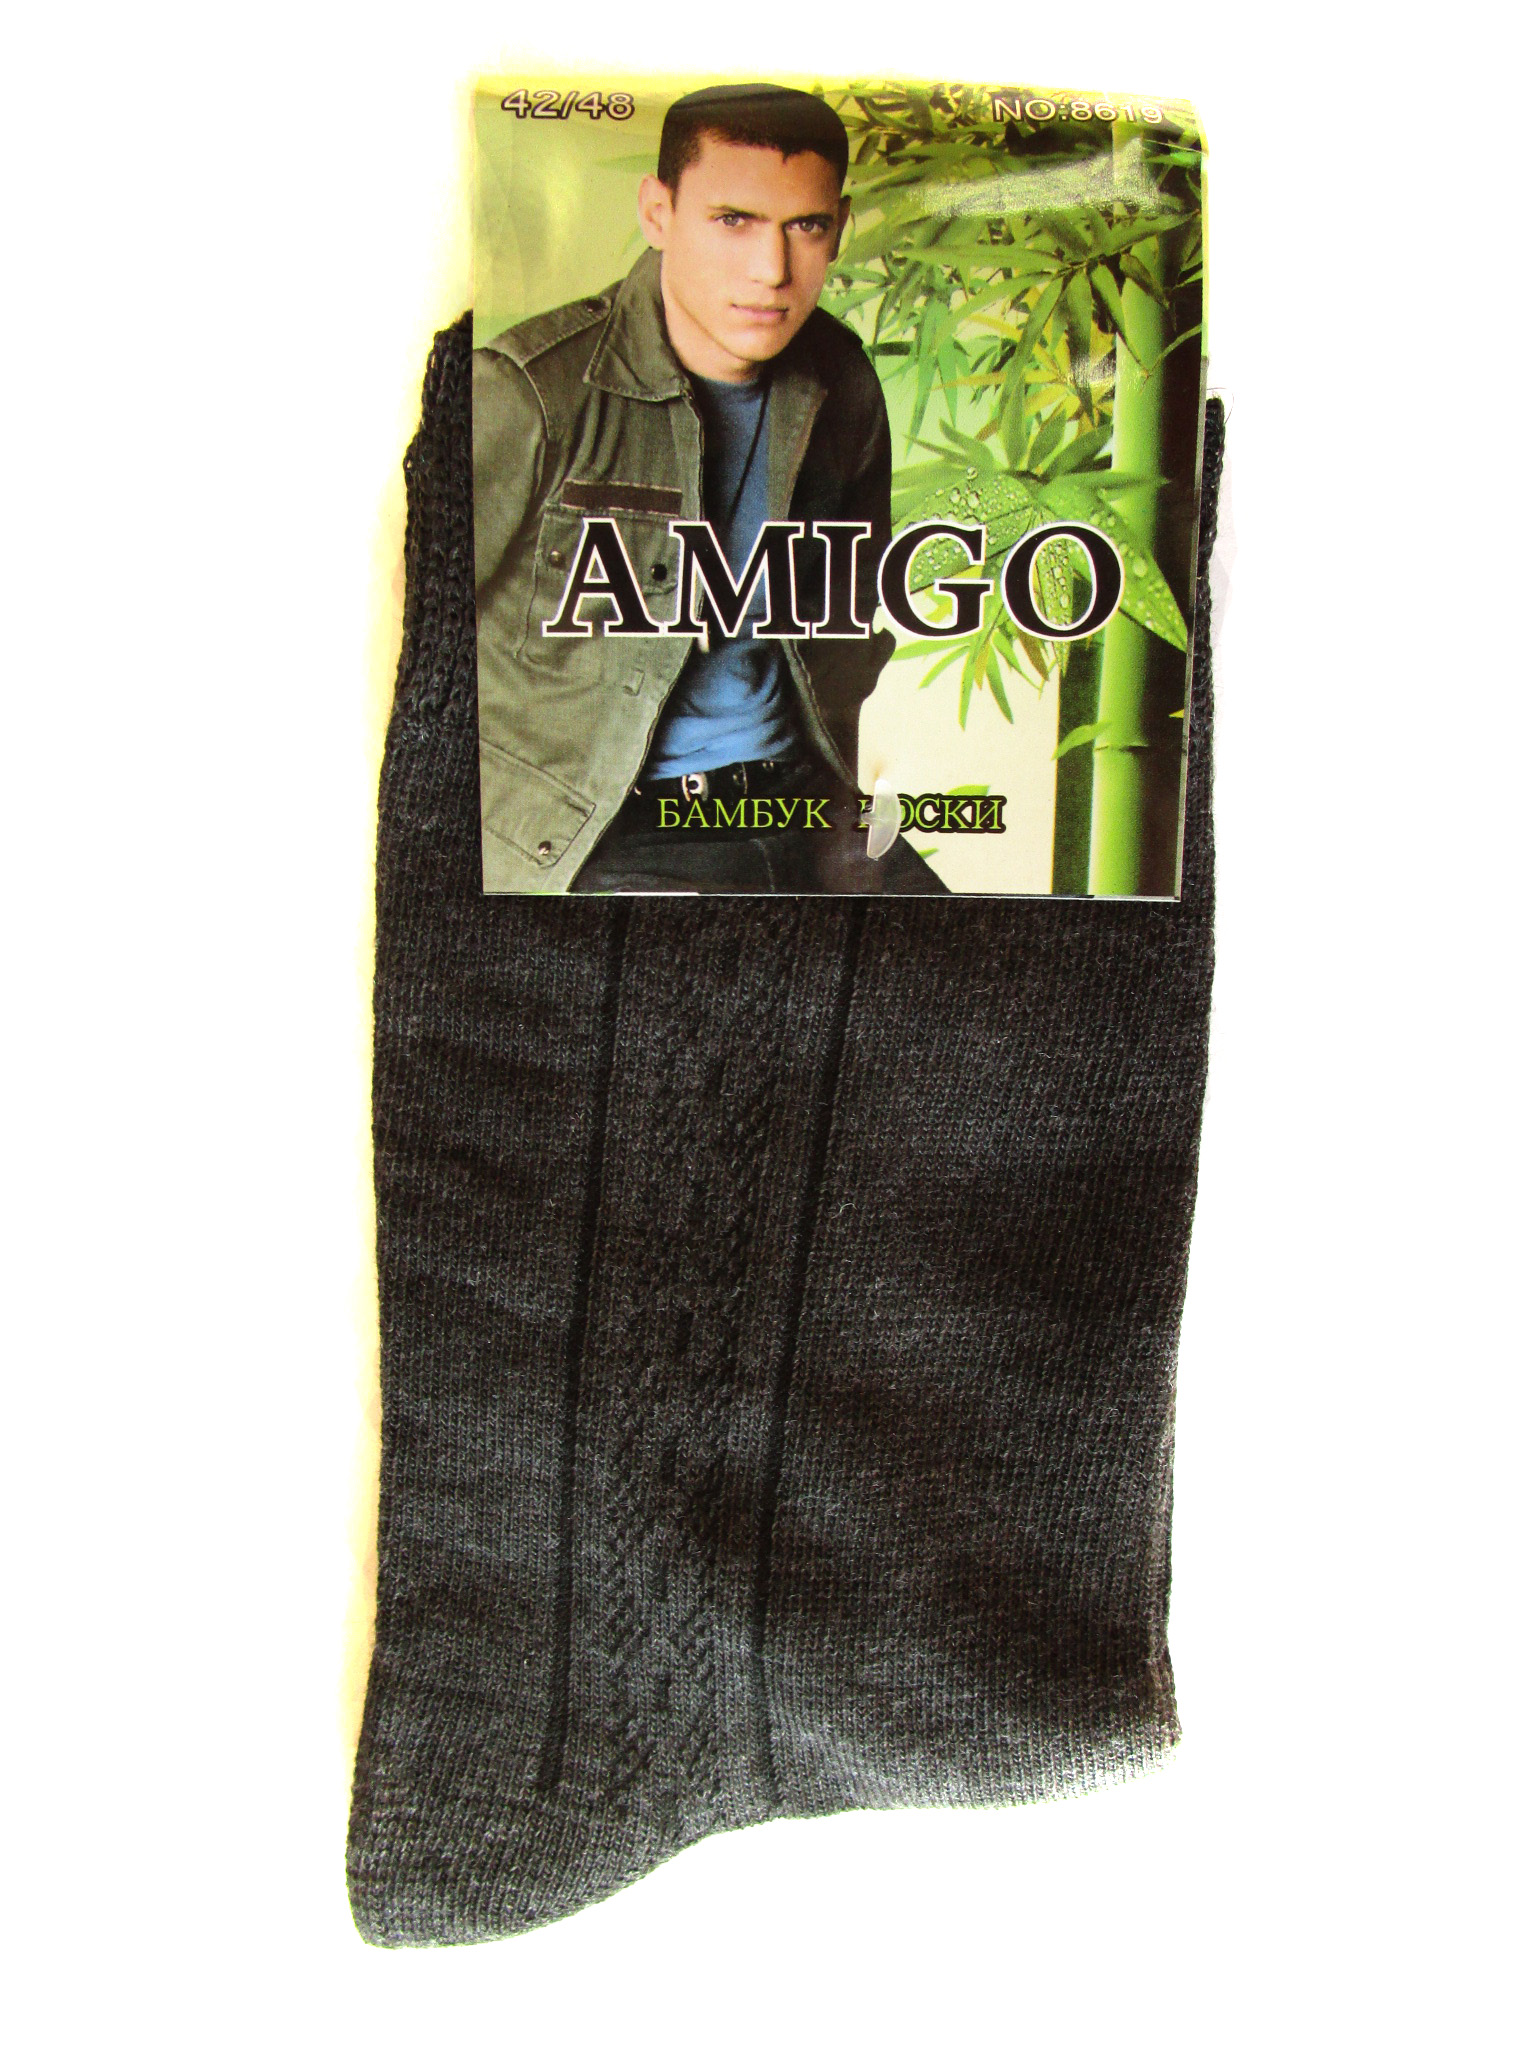 Мужские носки "Amigo" (арт.8619)